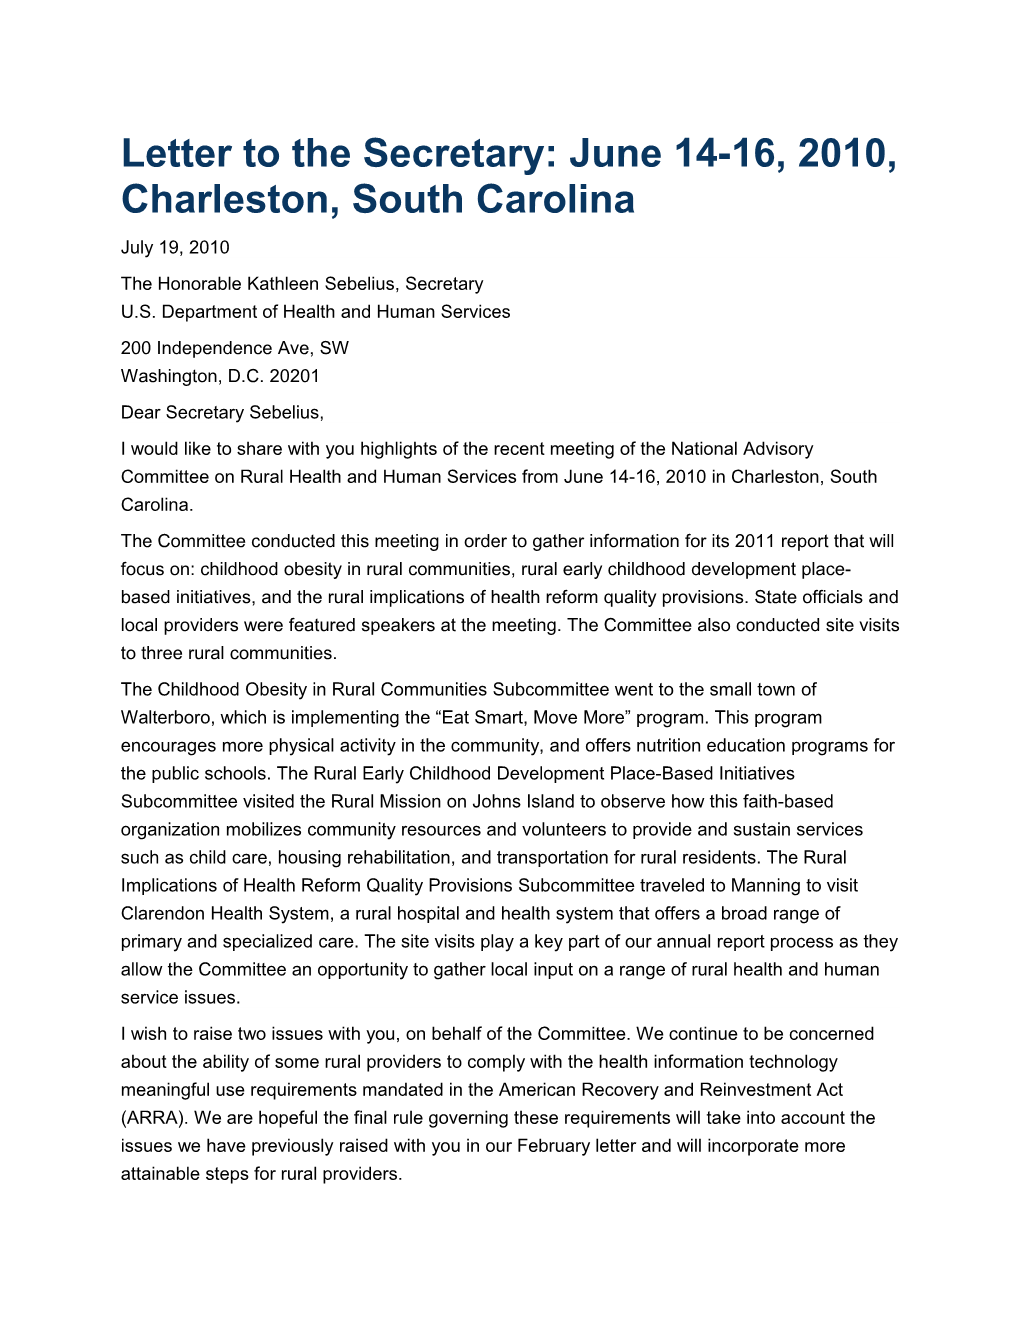 Letter to the Secretary: June 14-16, 2010, Charleston, South Carolina